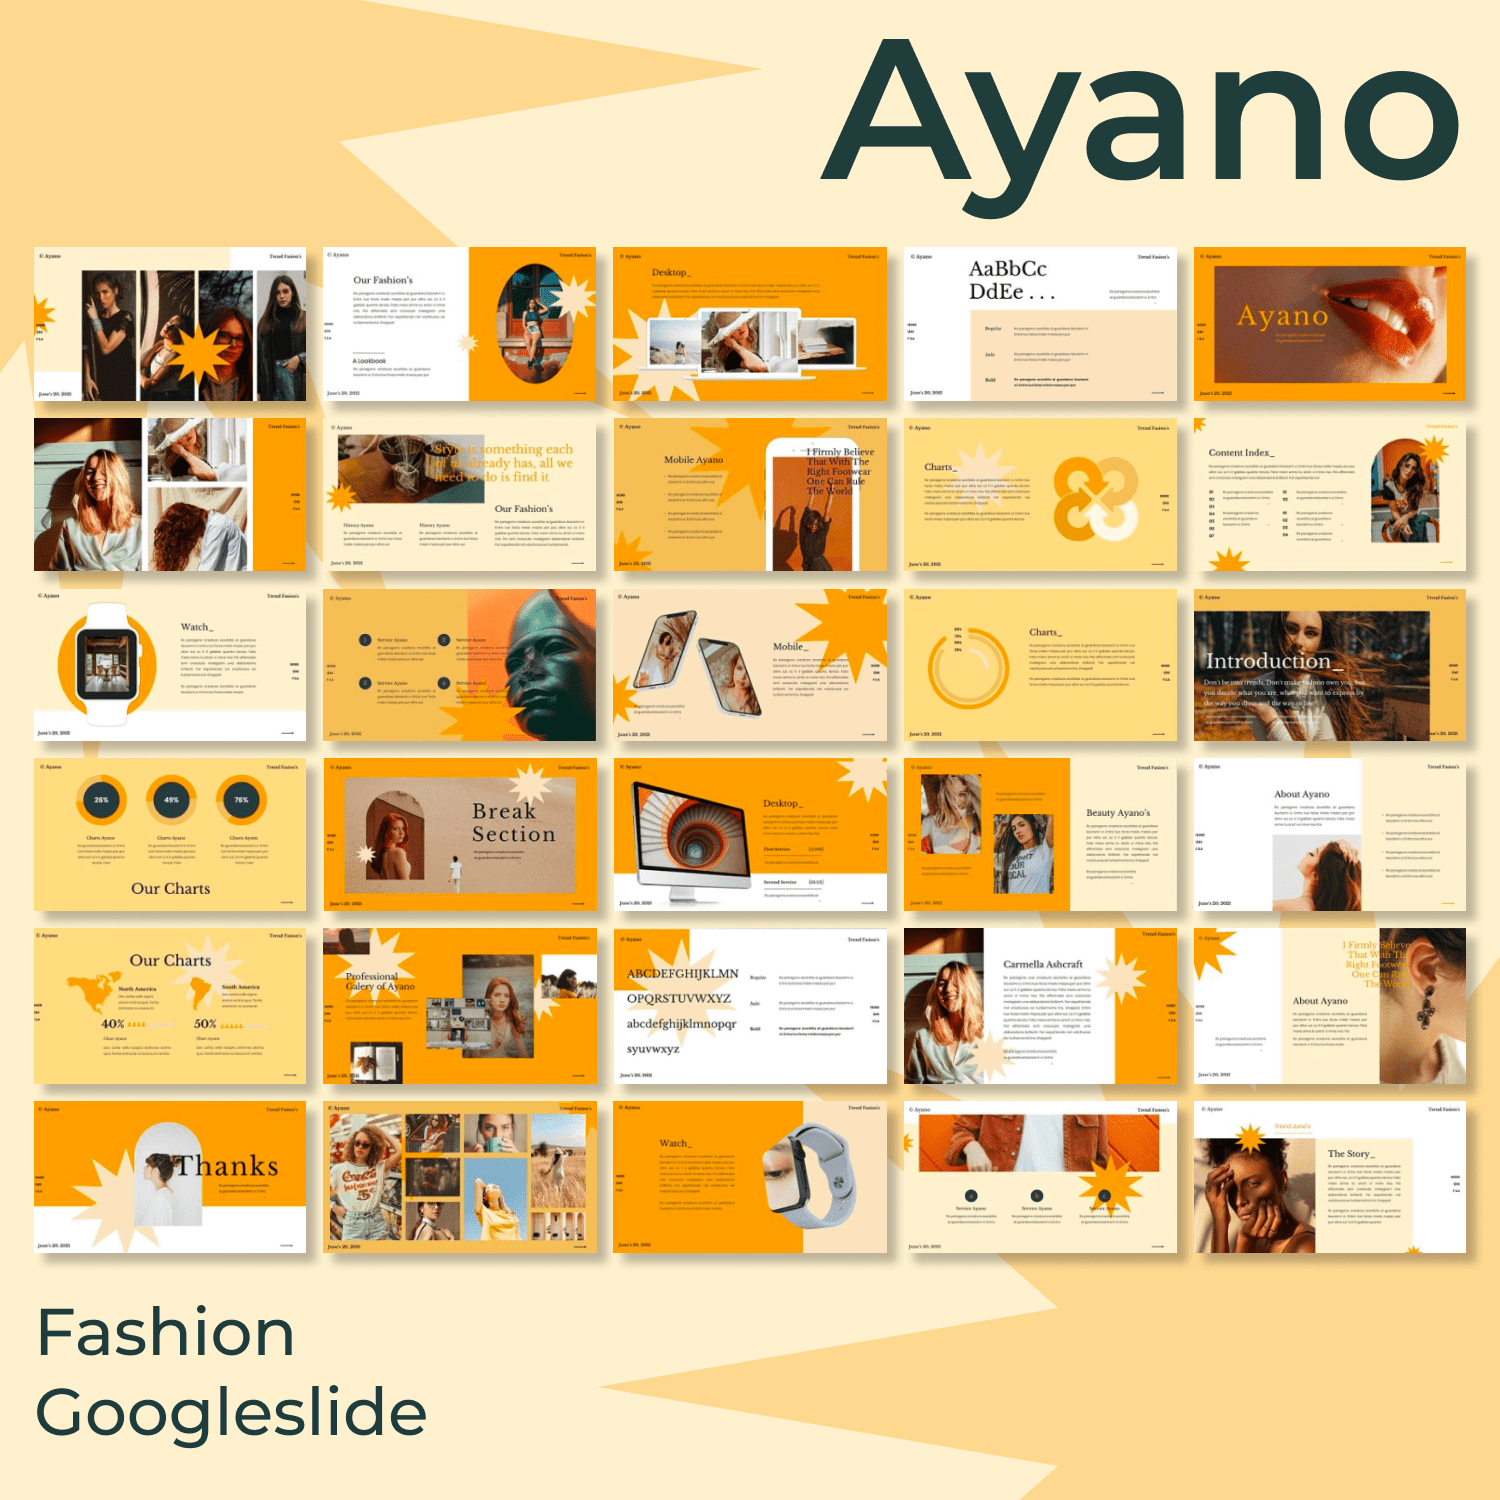 Ayano - Fashion Googleslide main cover.